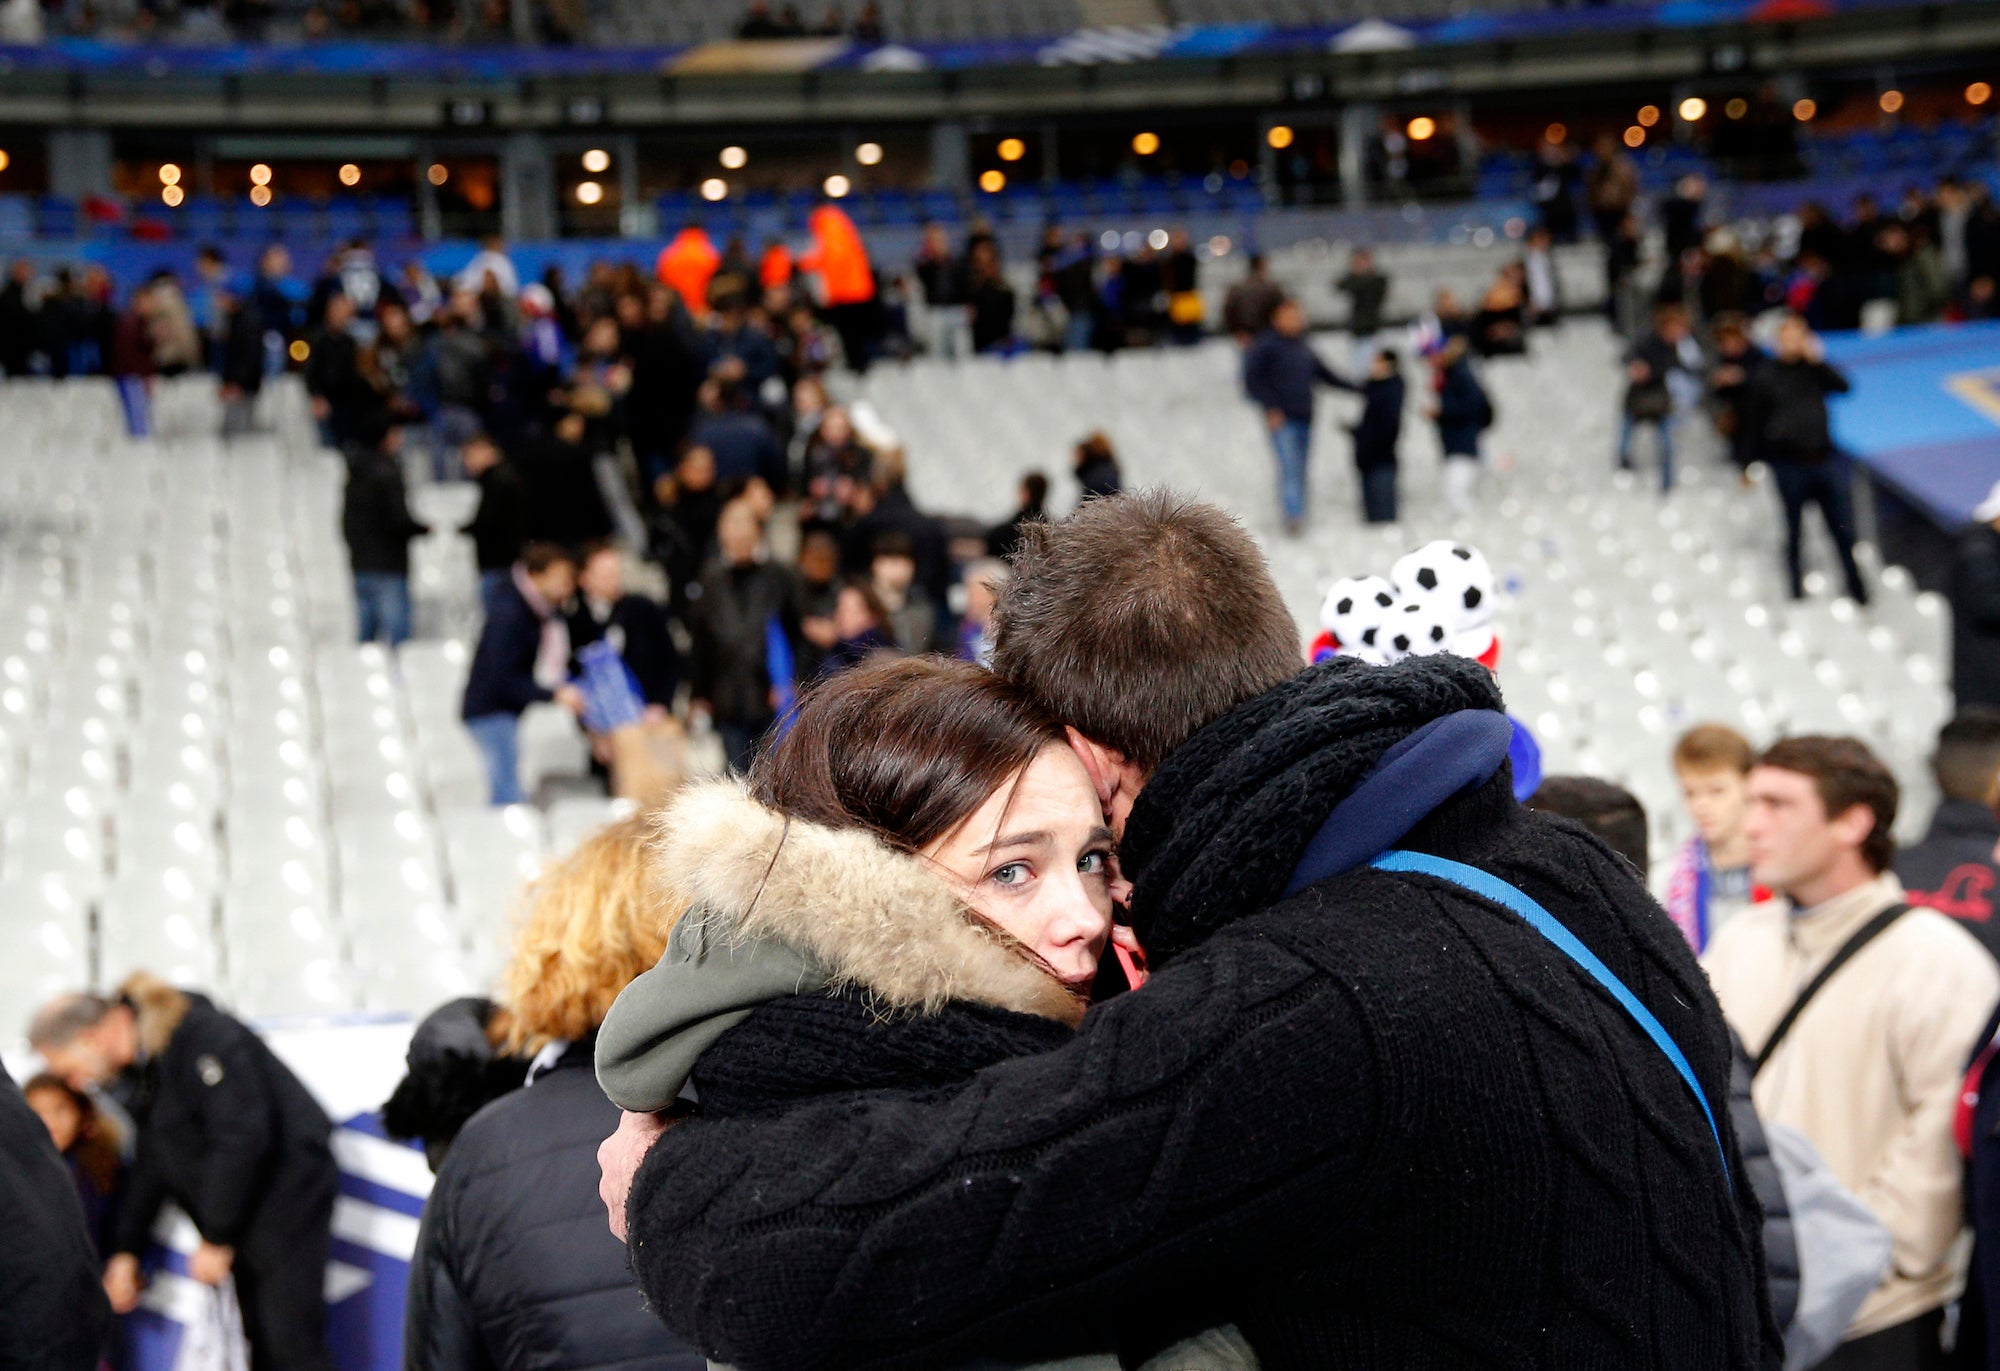 Friends embrace inside the Stade de France stadium in Paris.